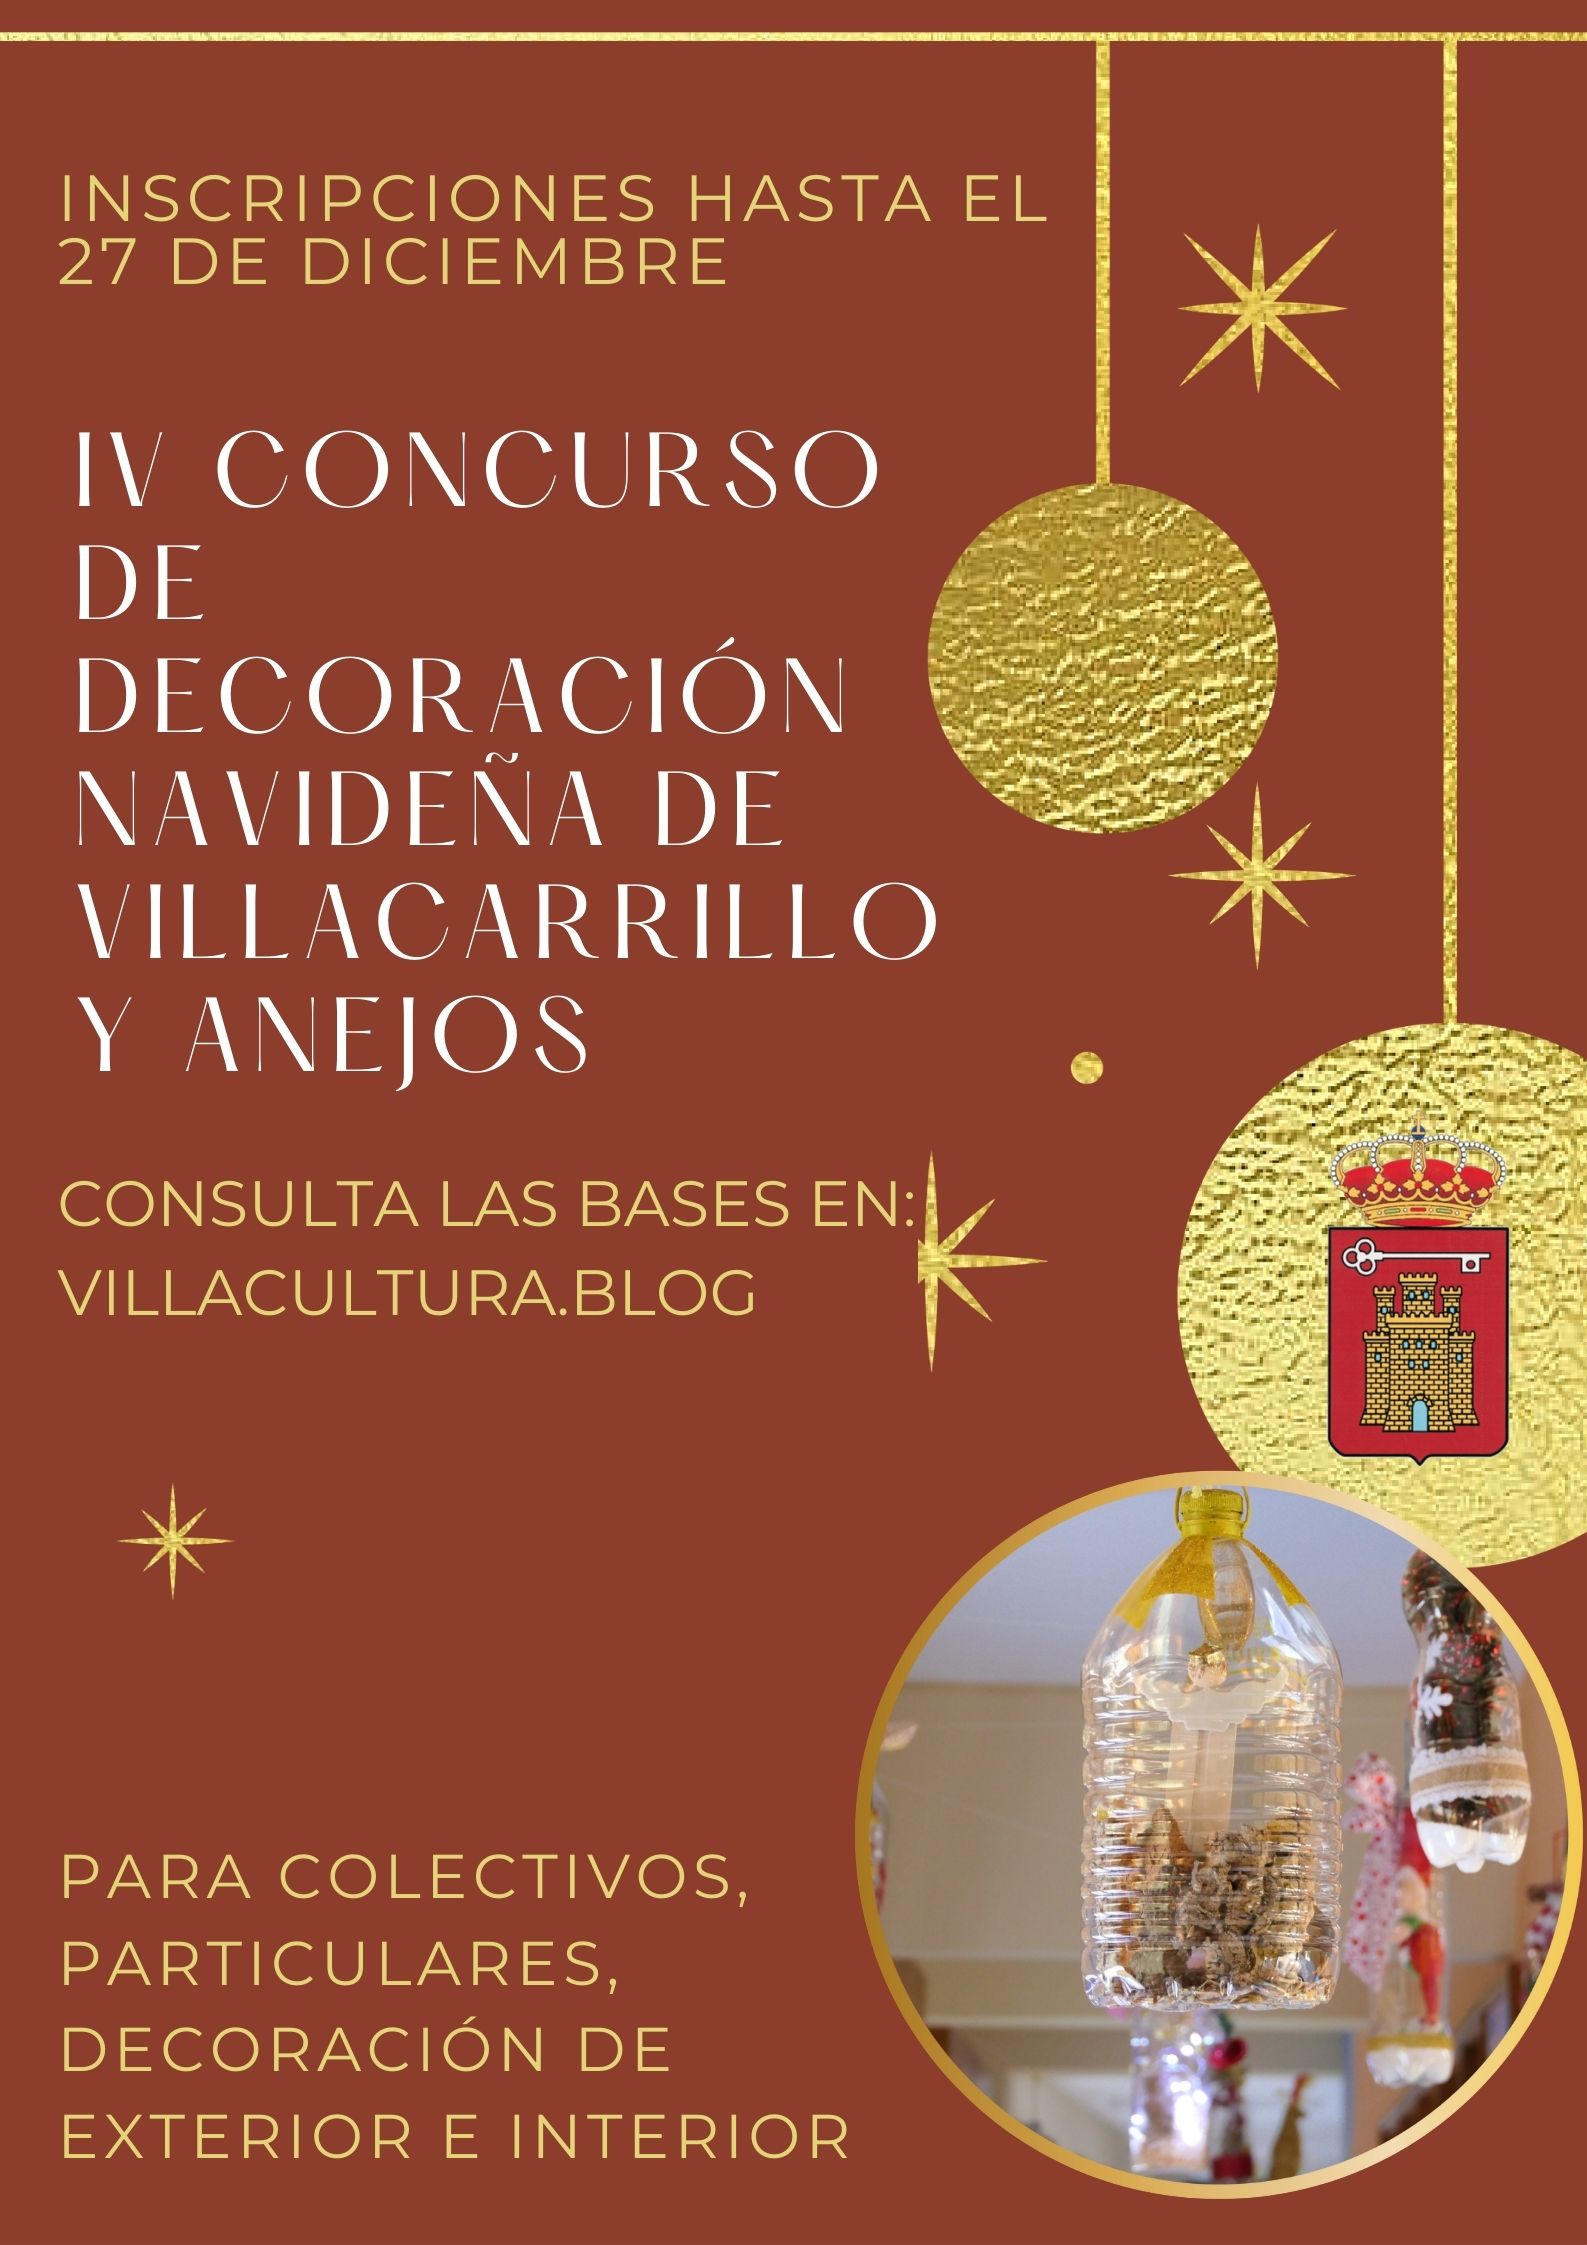 IV Concurso de Decoración Navideña de Villacarrillo y Anejos